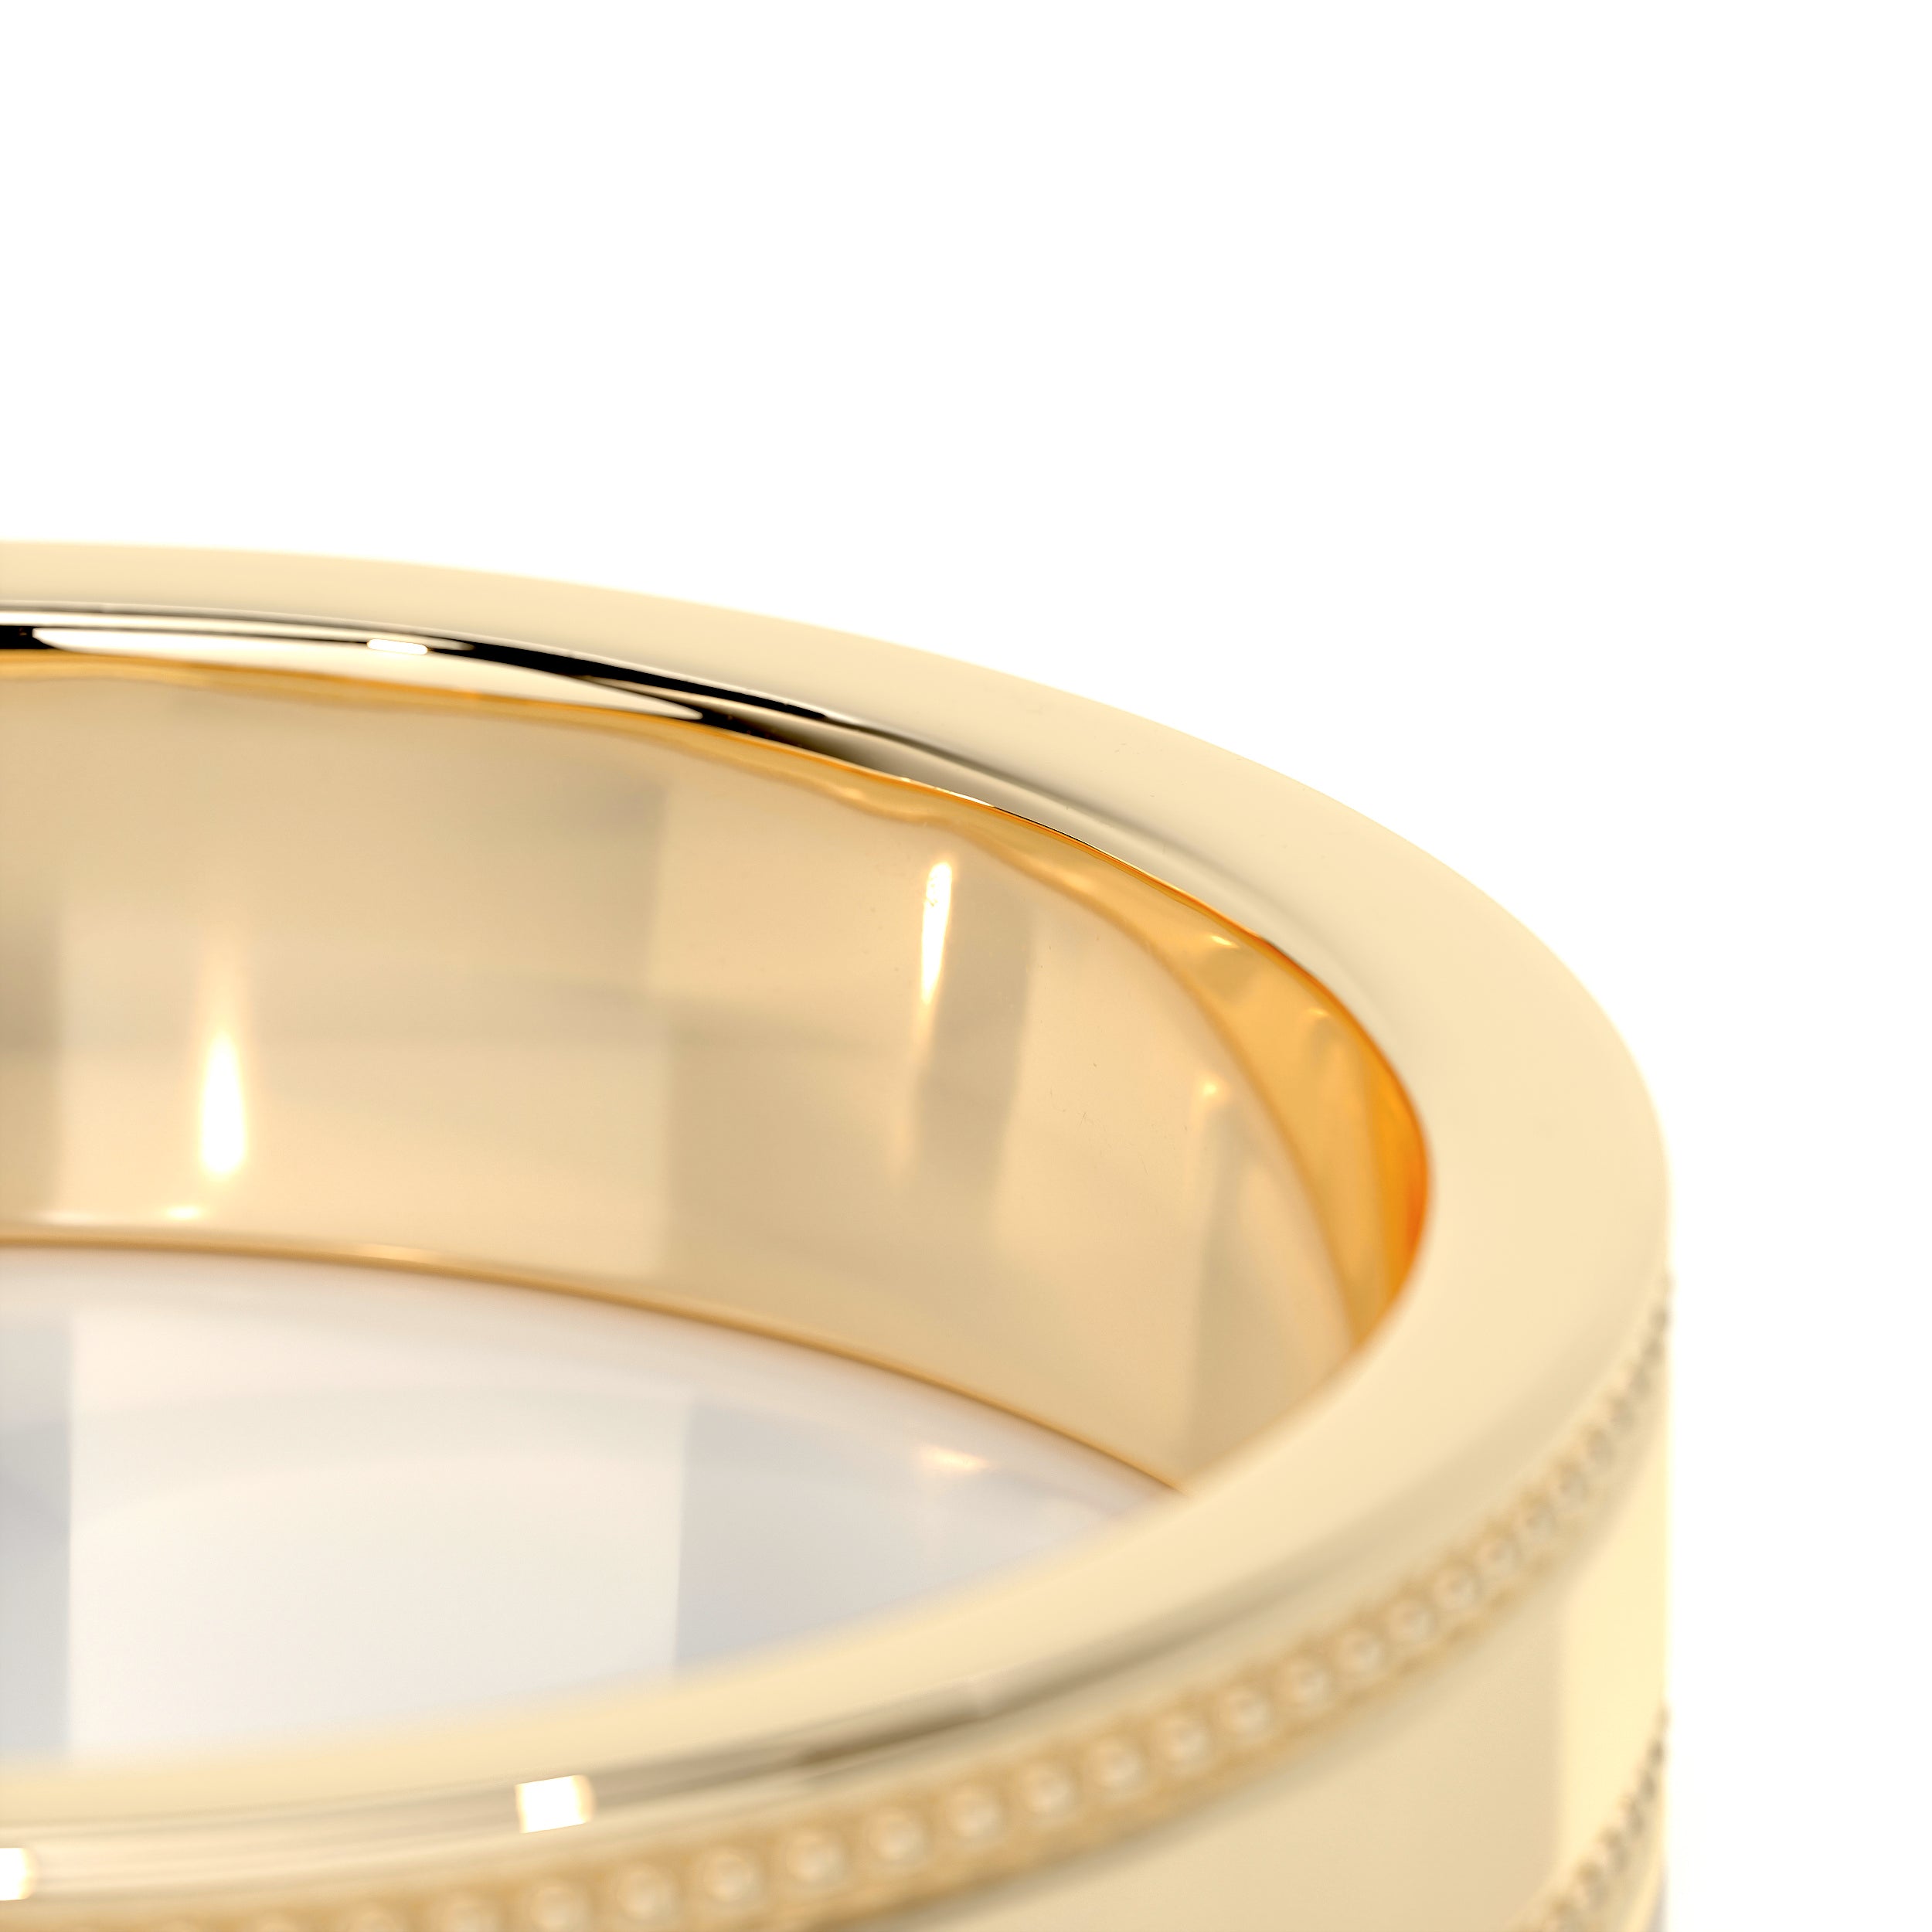 Sherry Diamond Wedding Ring   (0.02 Carat) -18K Yellow Gold